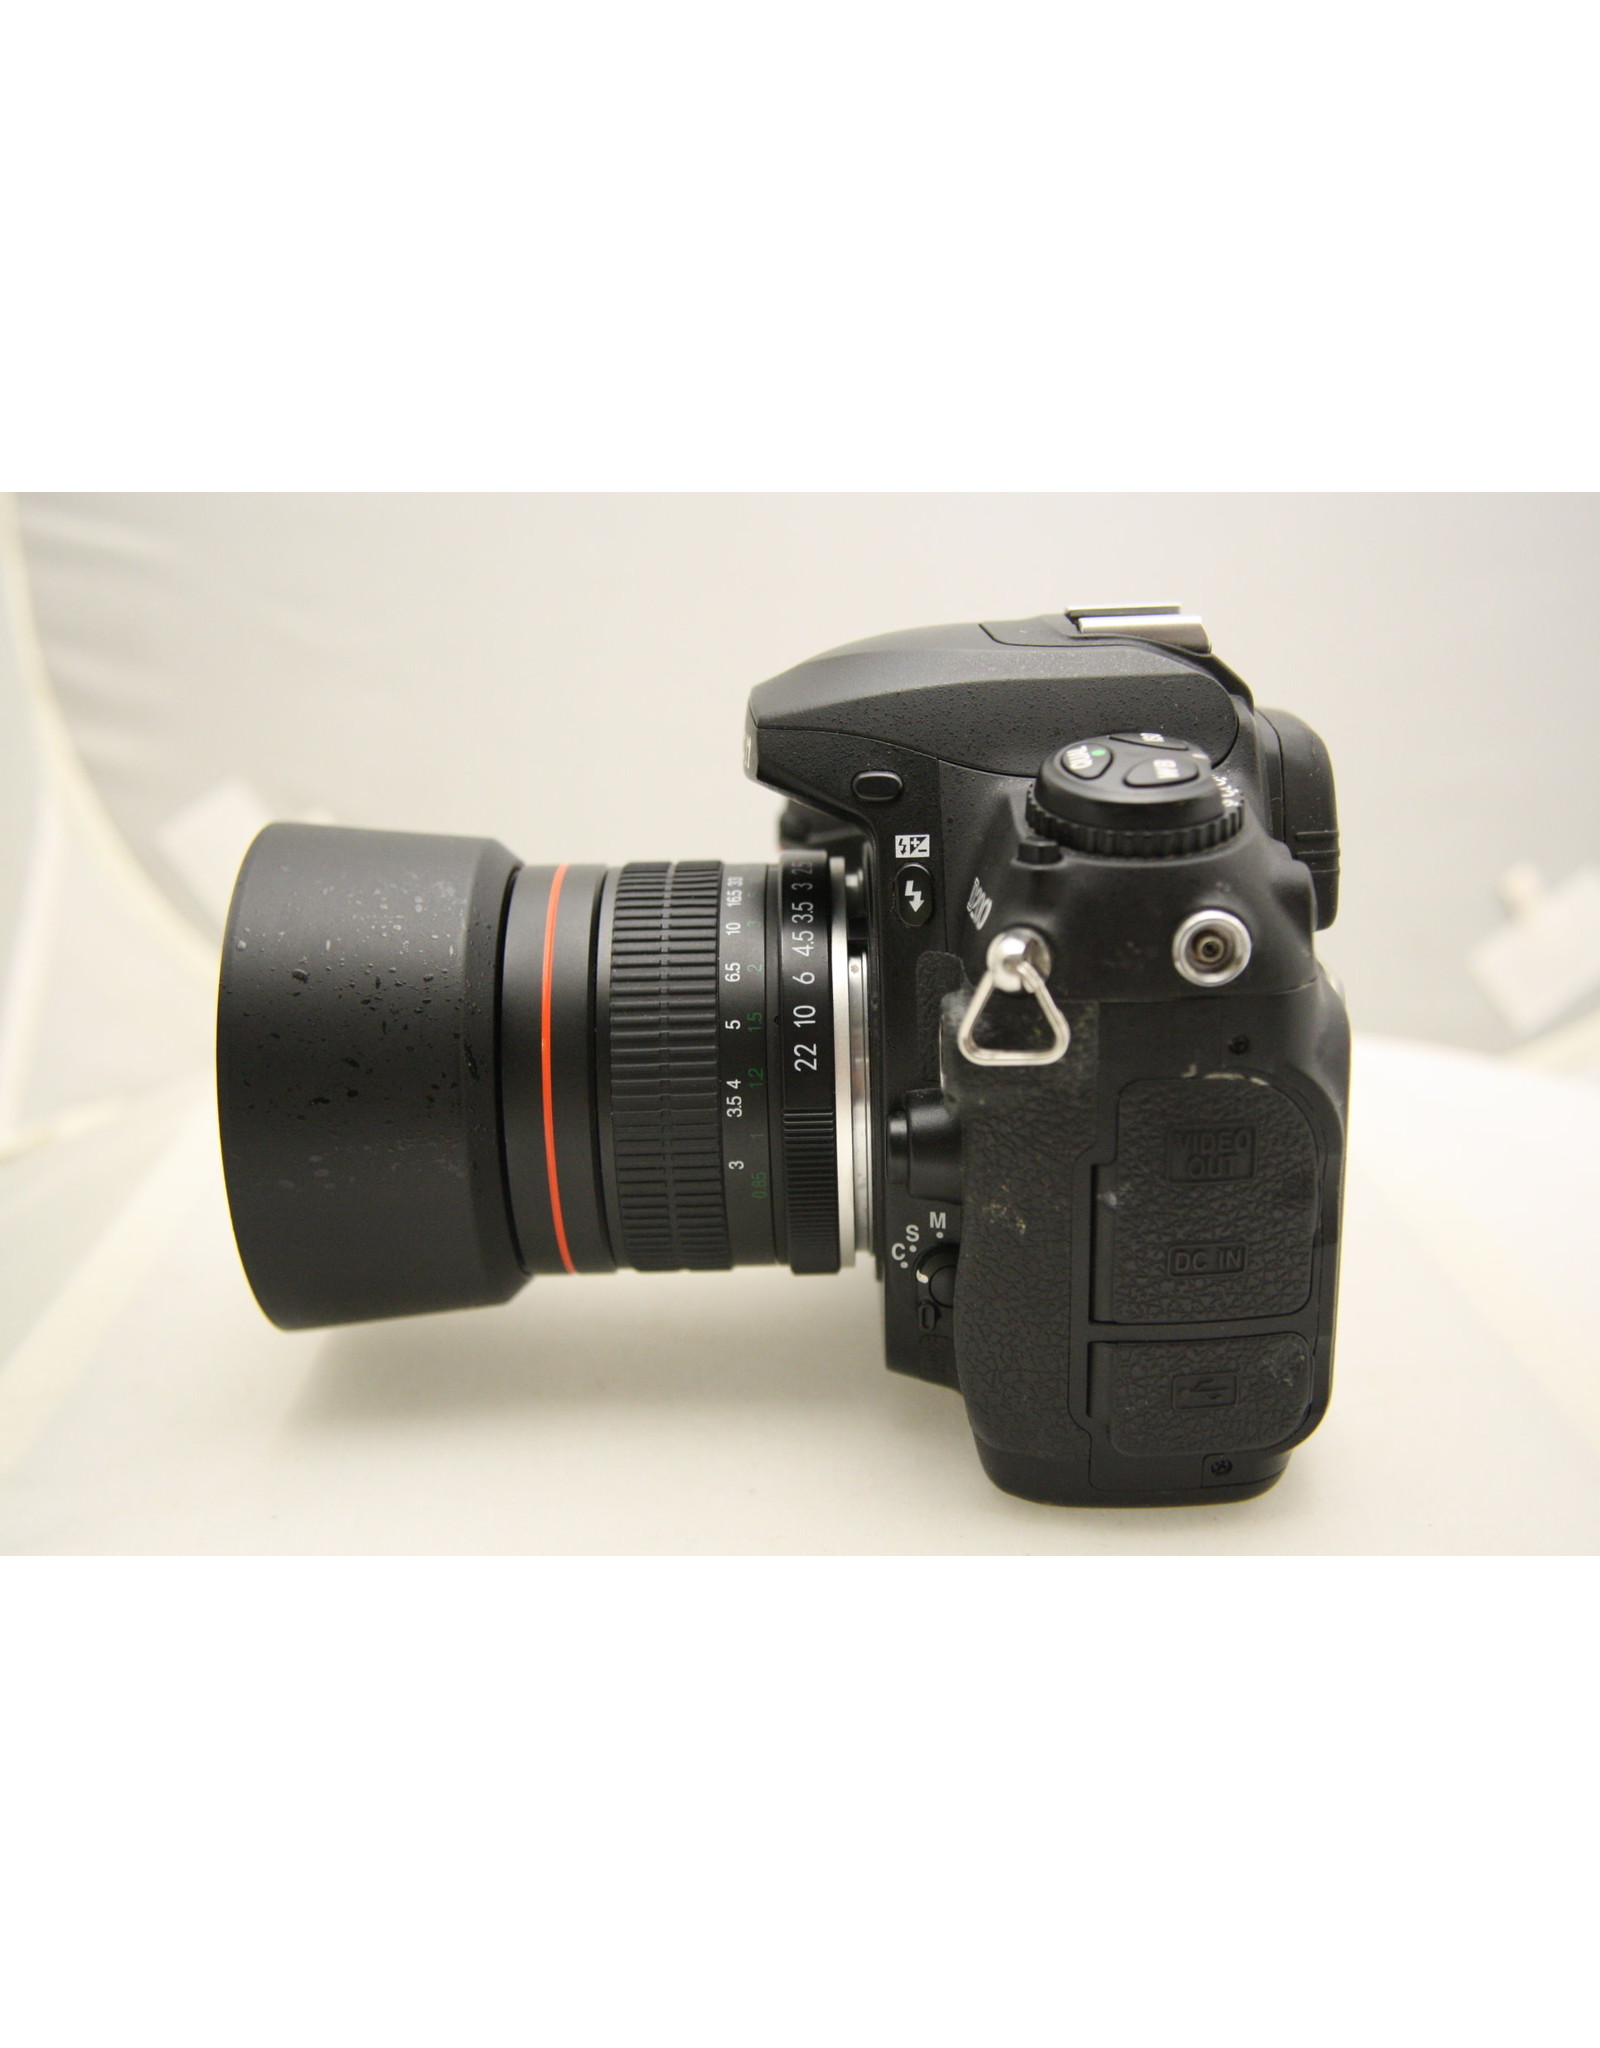 Nikon Nikon D200 10.2MP Digital SLR Camera w/ 35mm 1.8 Lens (?) (Pre-Owned)